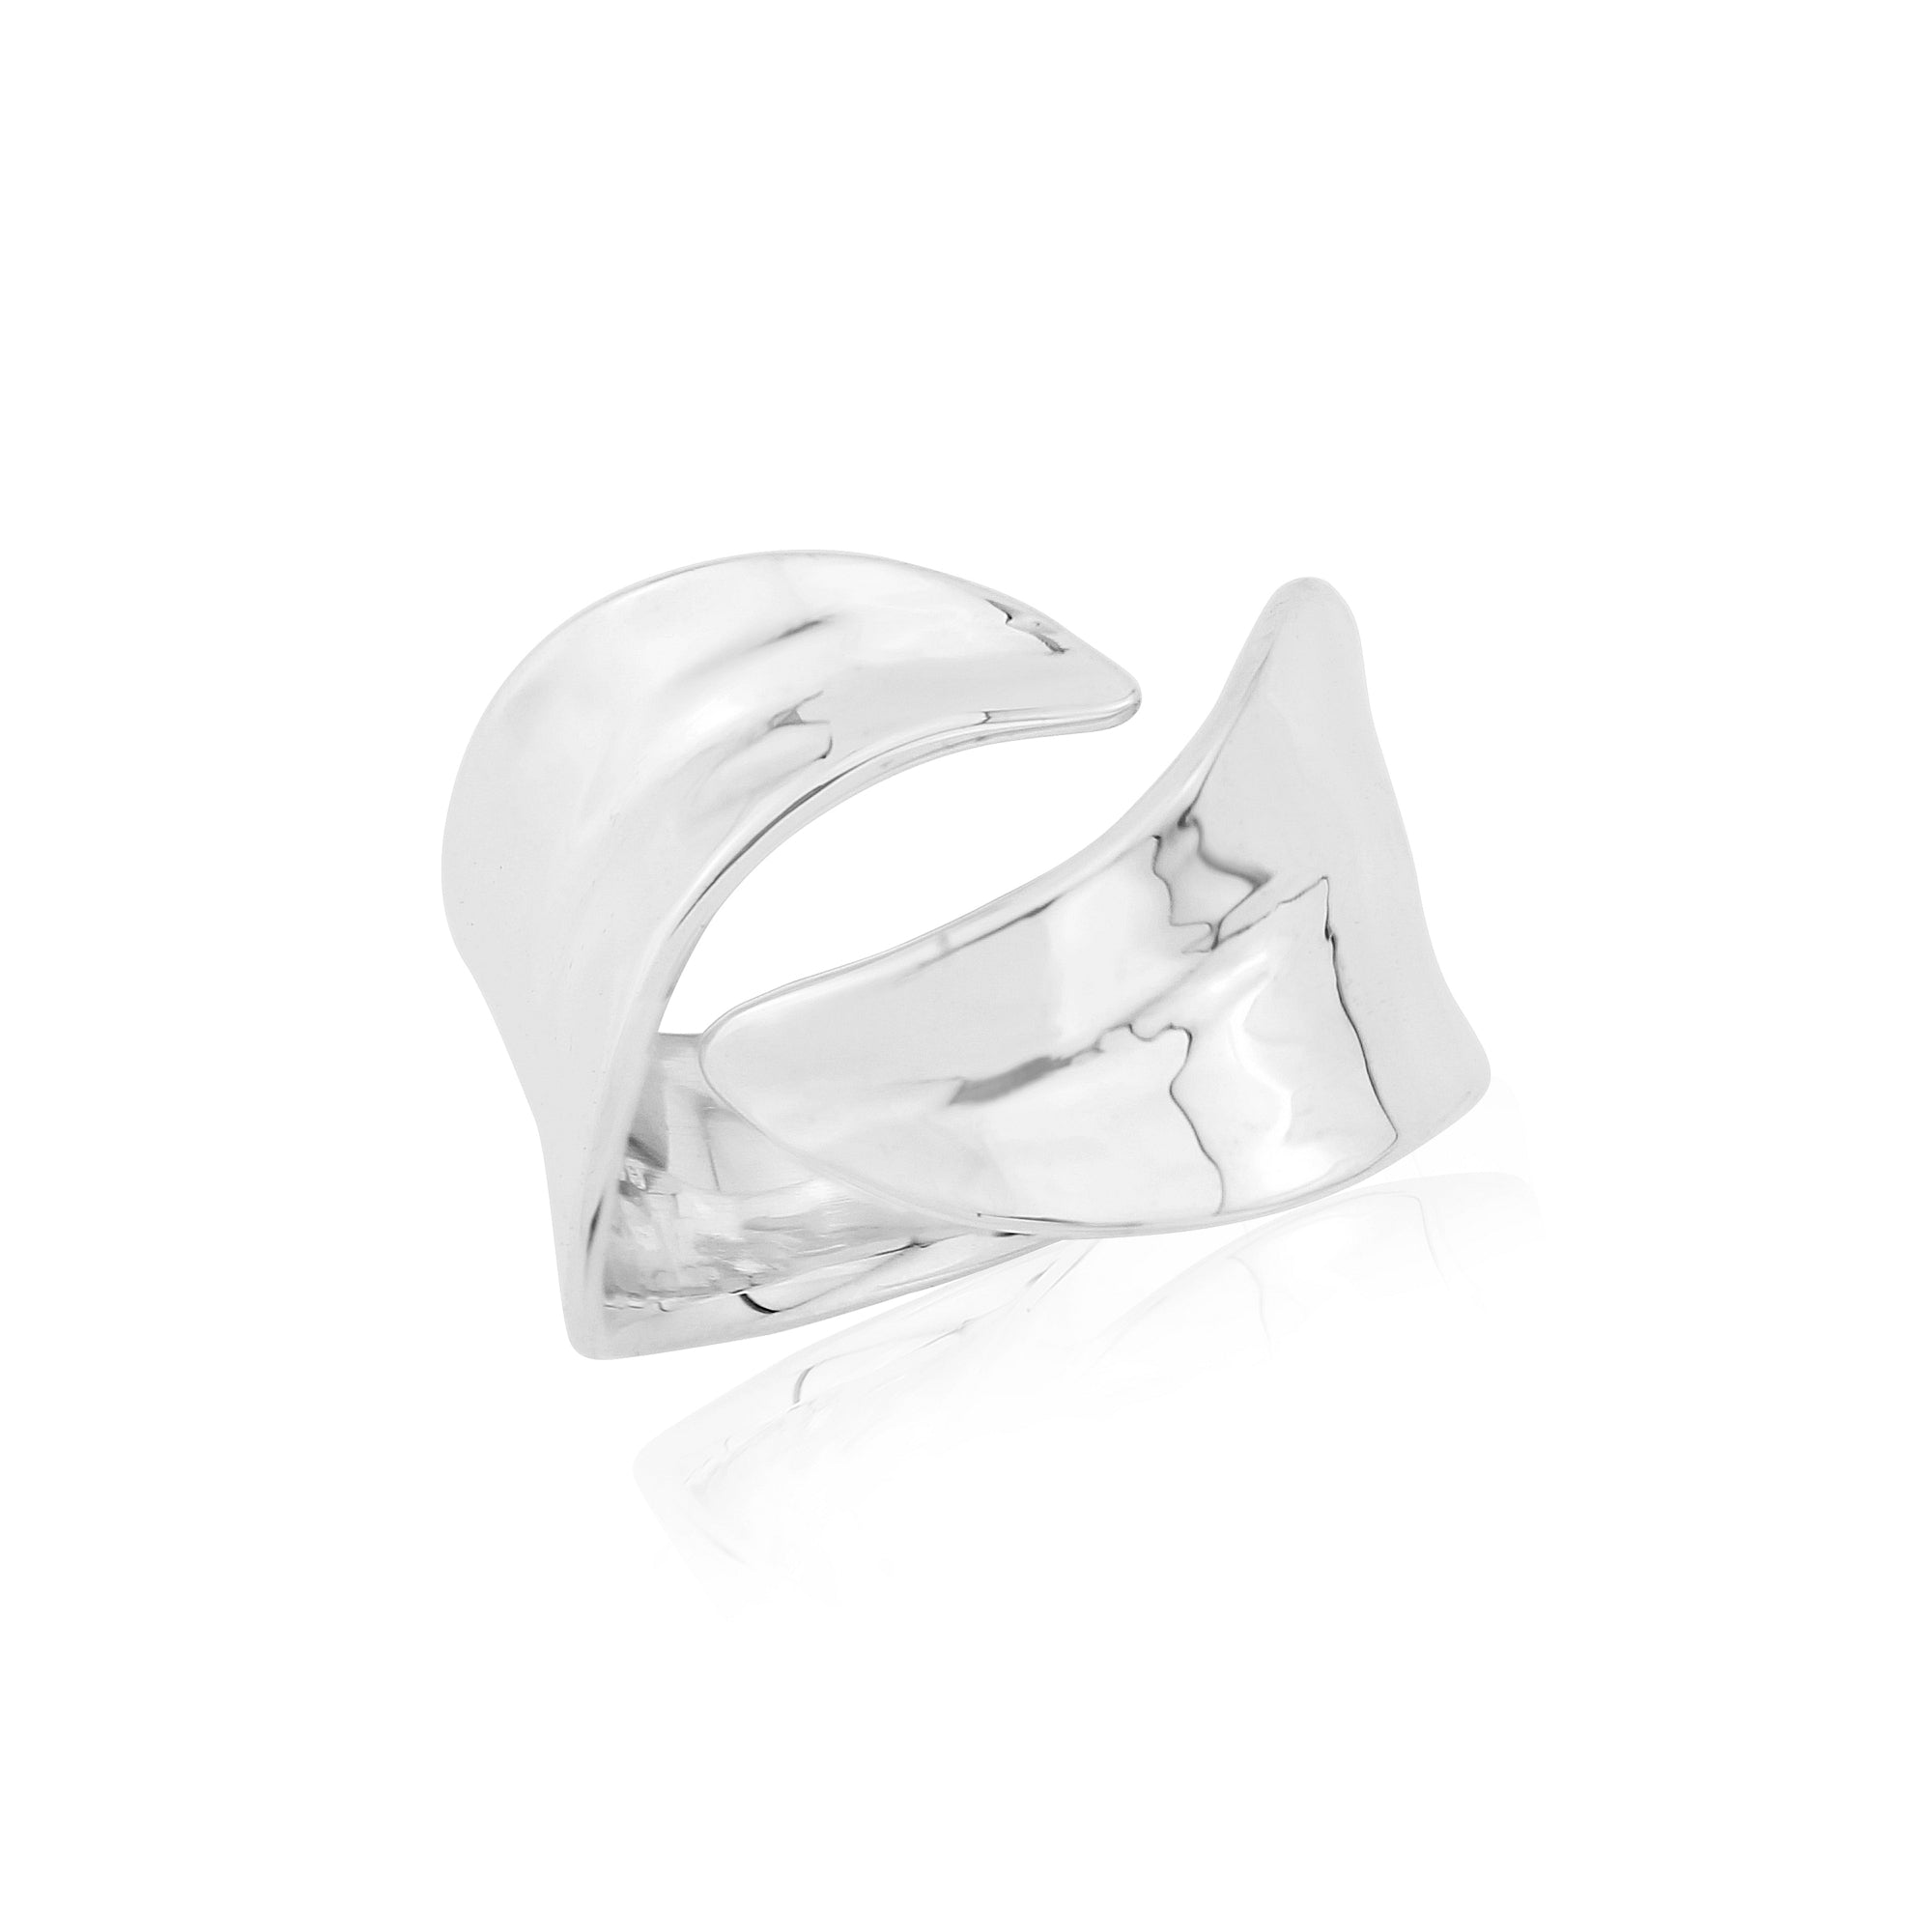 Handmade hammered silver ring